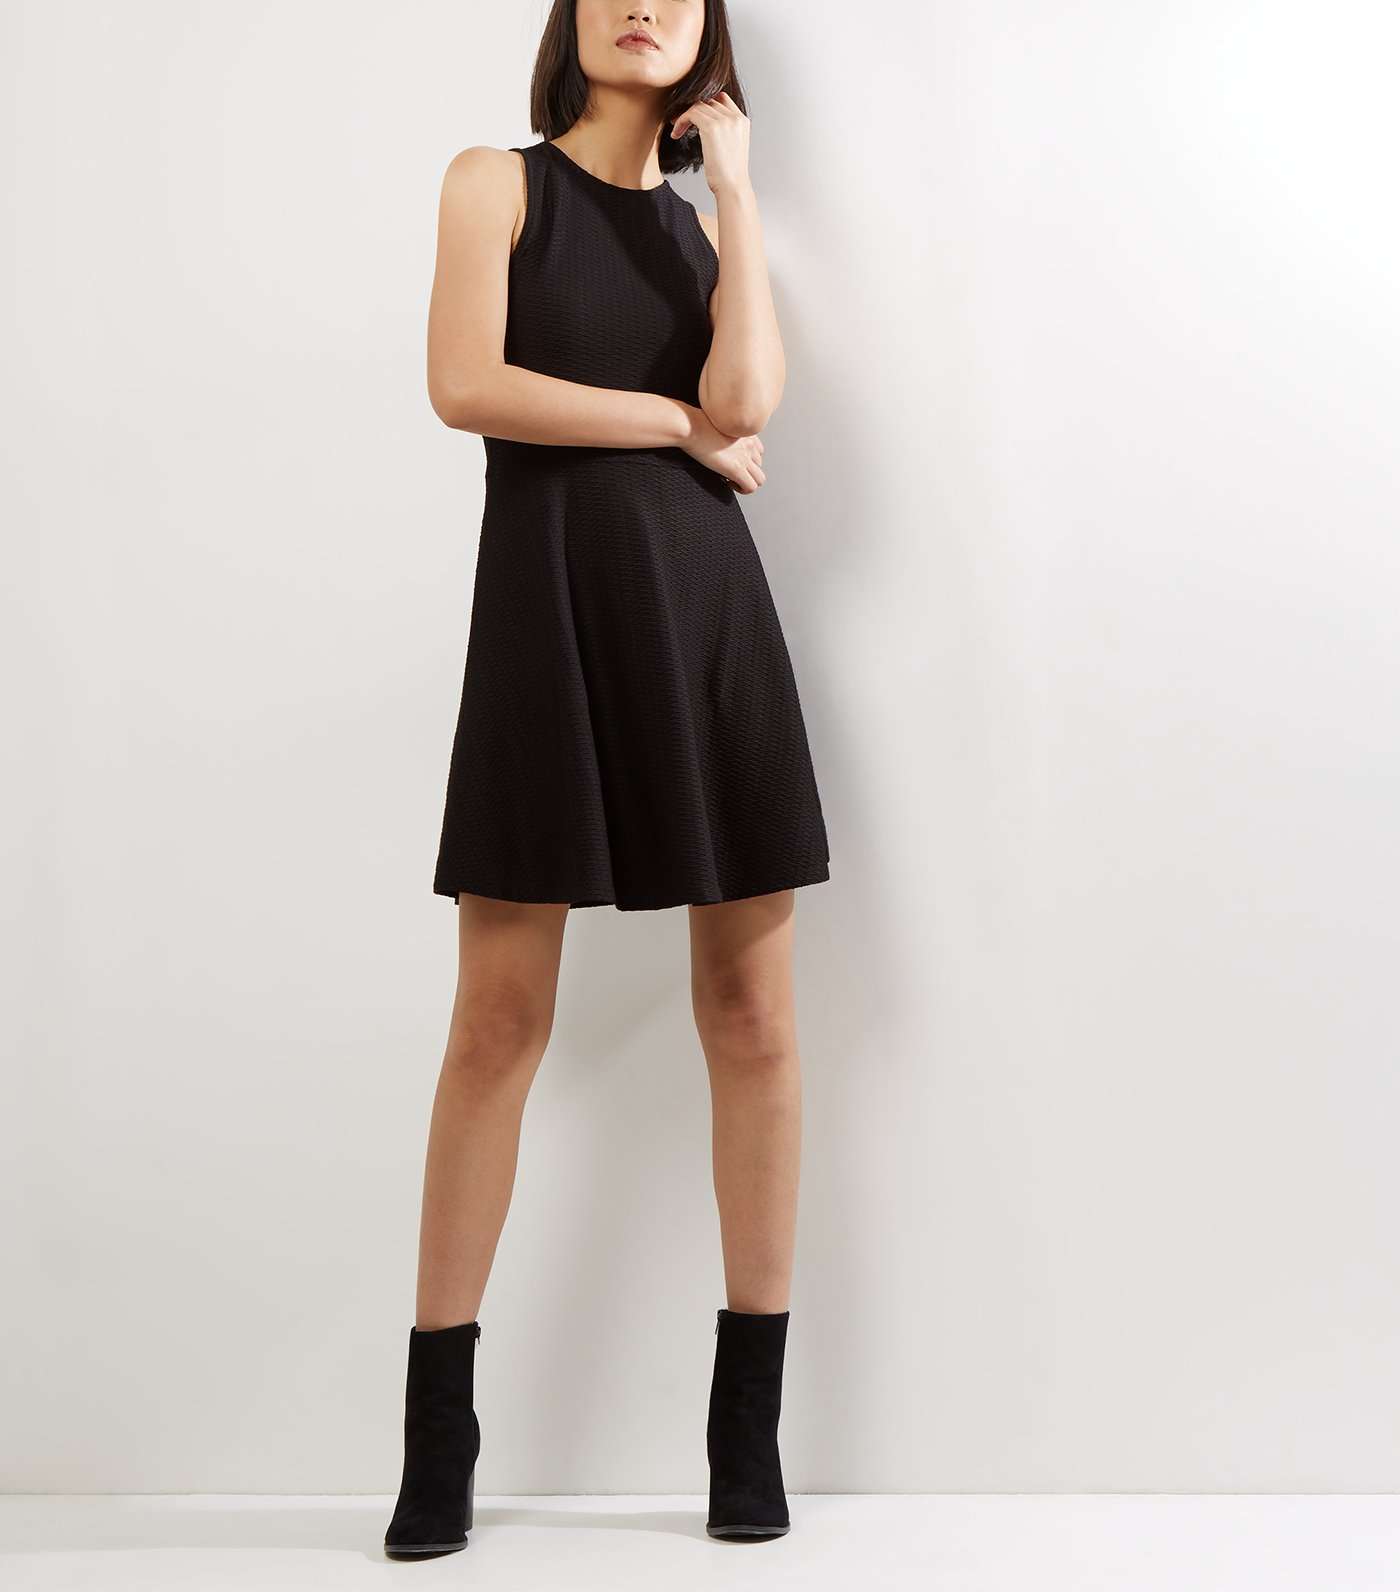 Black Jacquard Textured Skater Dress Image 2